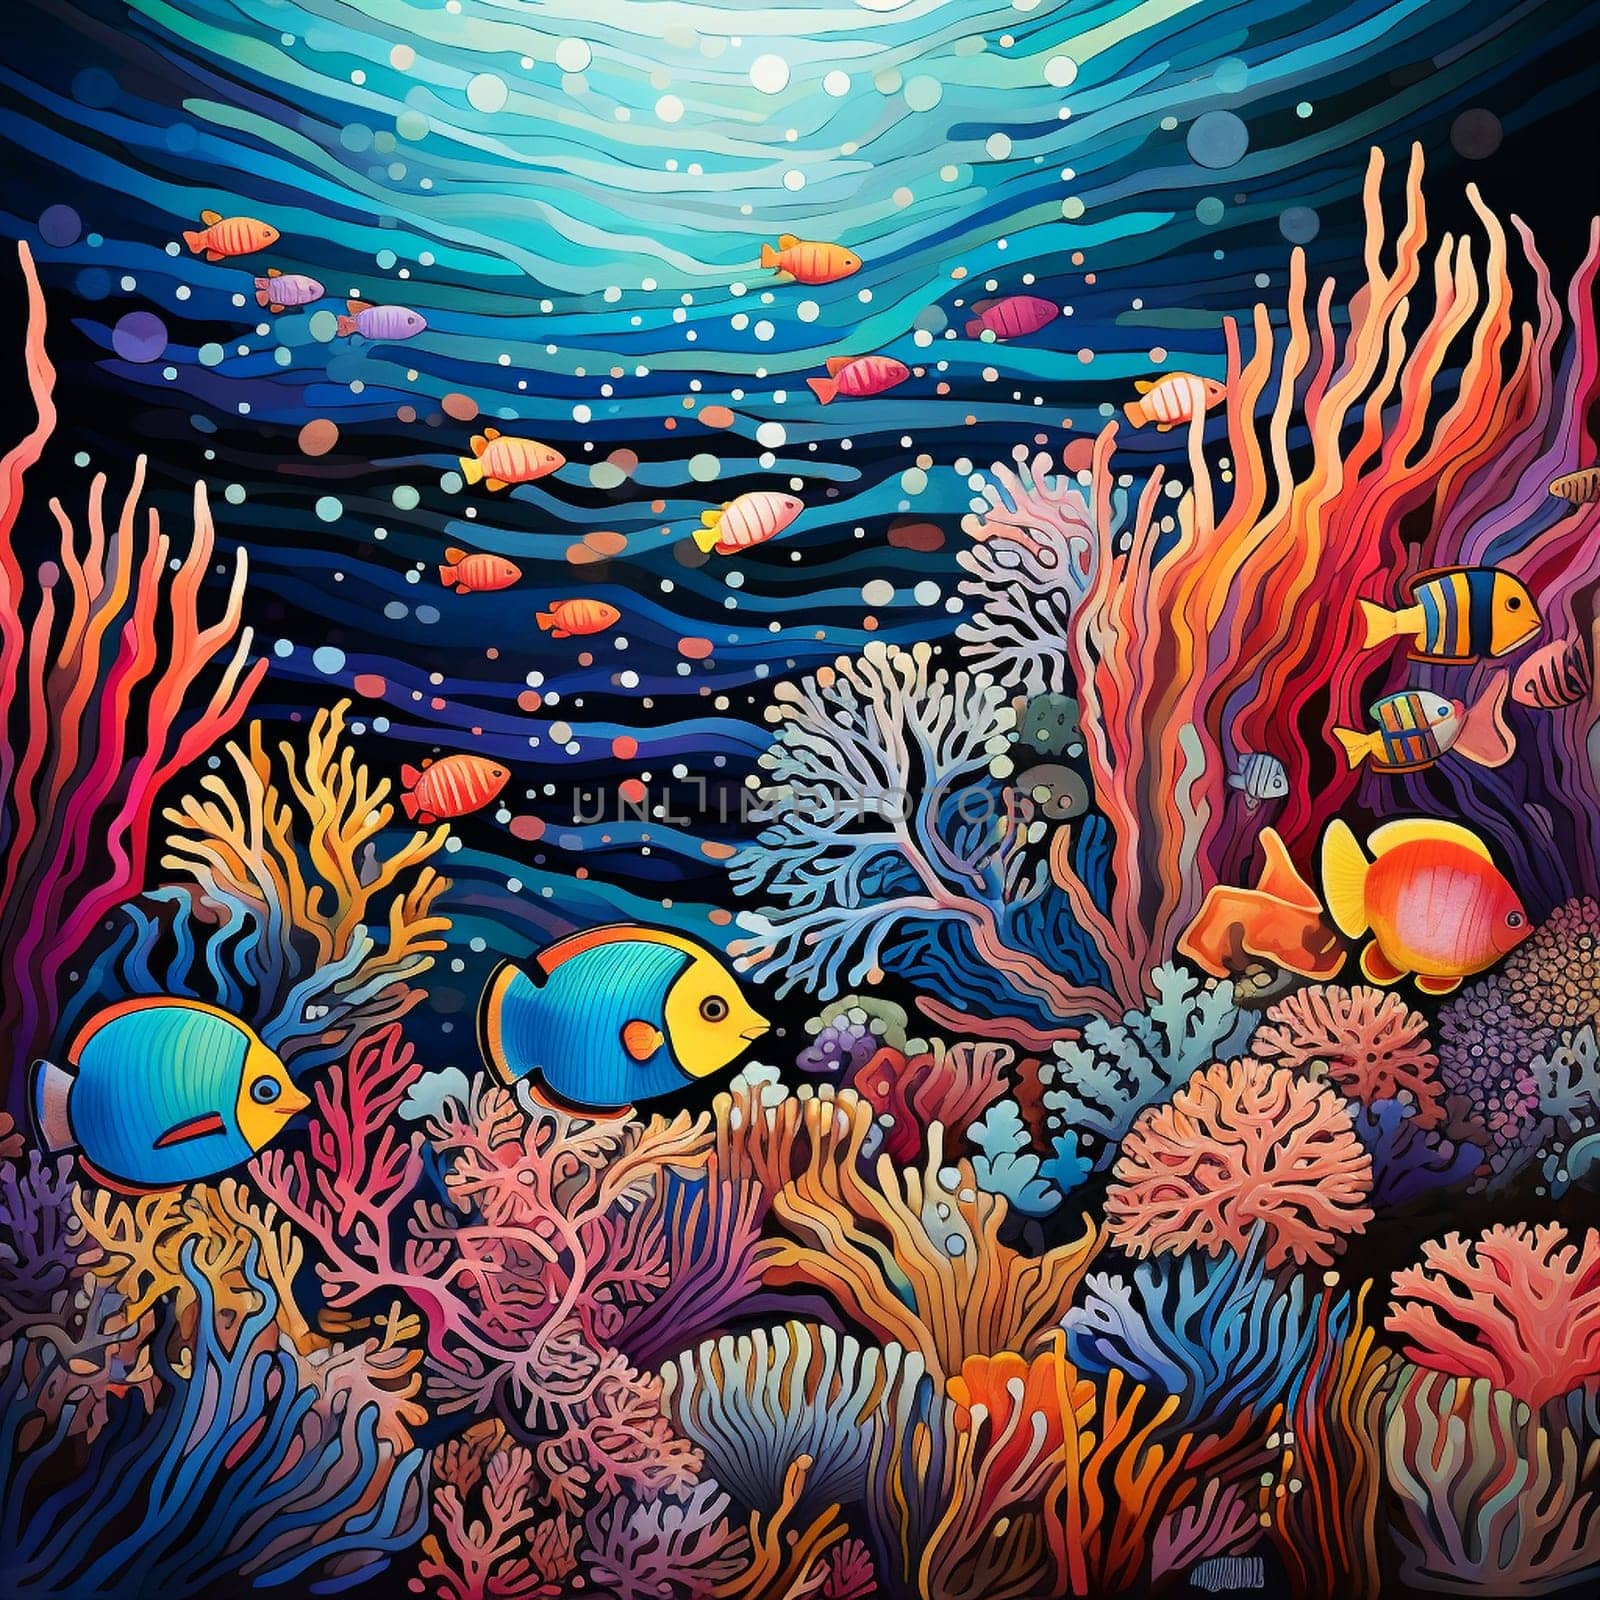 Surreal Underwater Scene by Sahin